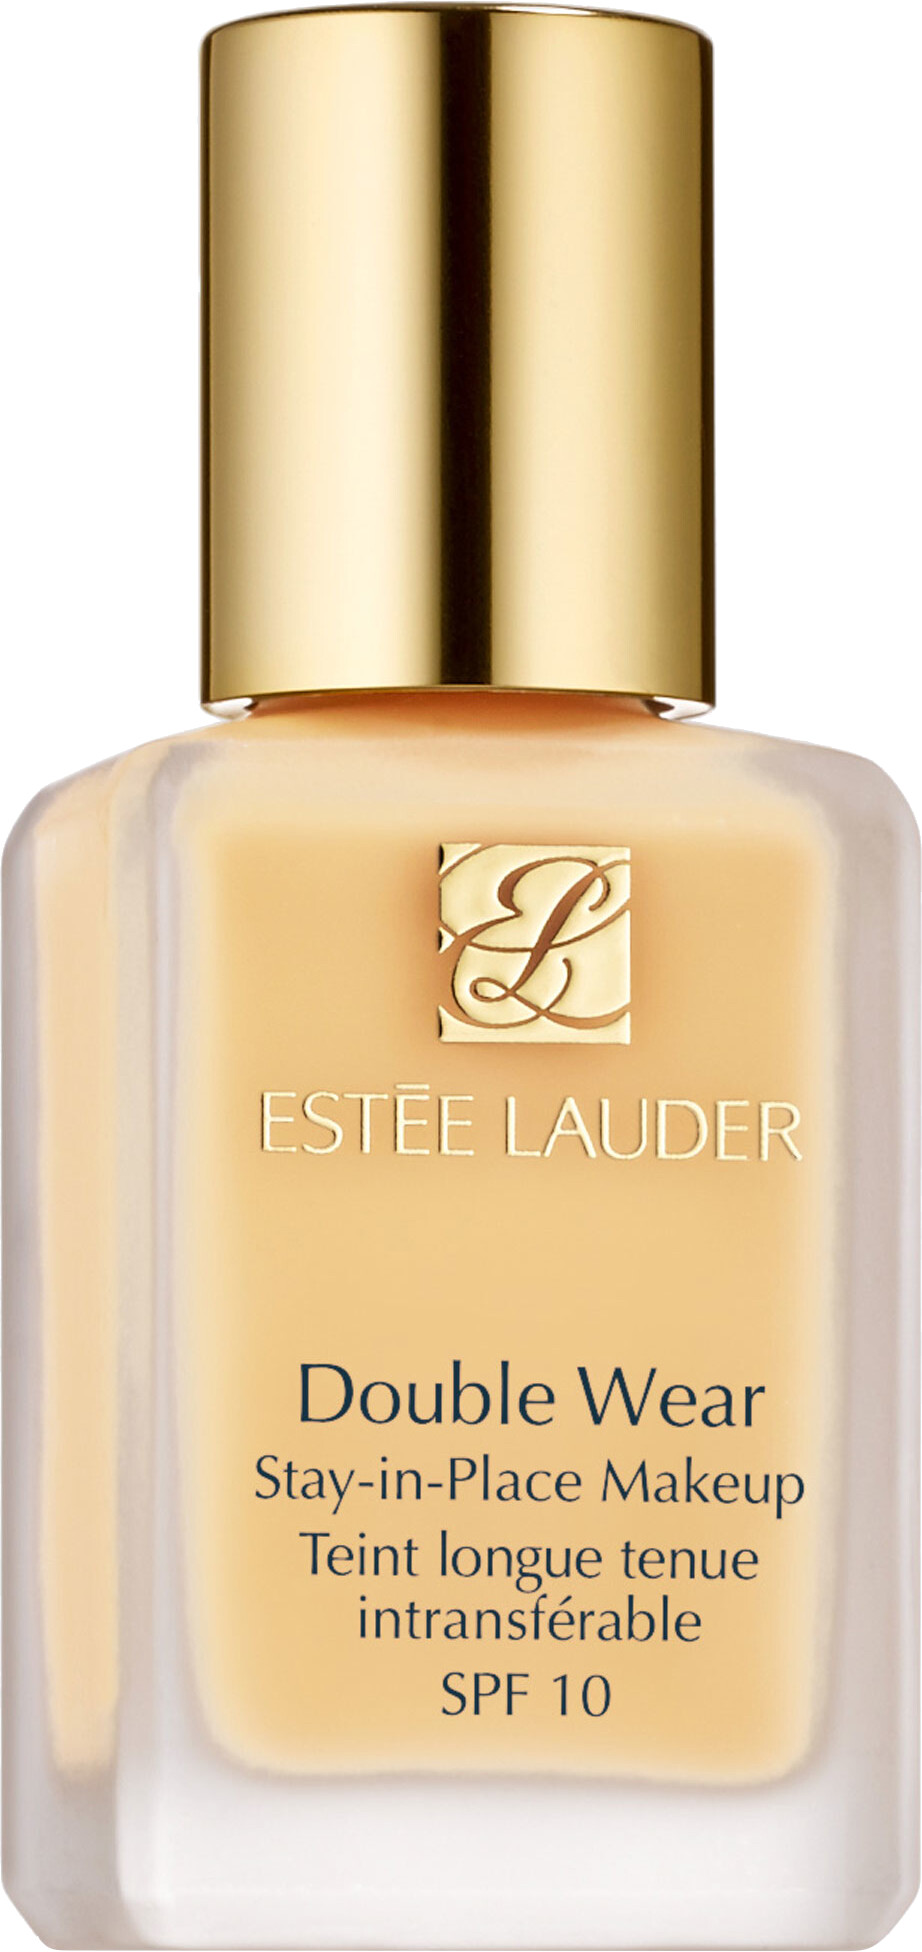 Estee Lauder Double Wear Stay-in-Place Foundation SPF10 30ml 1C1 - Cool Bone